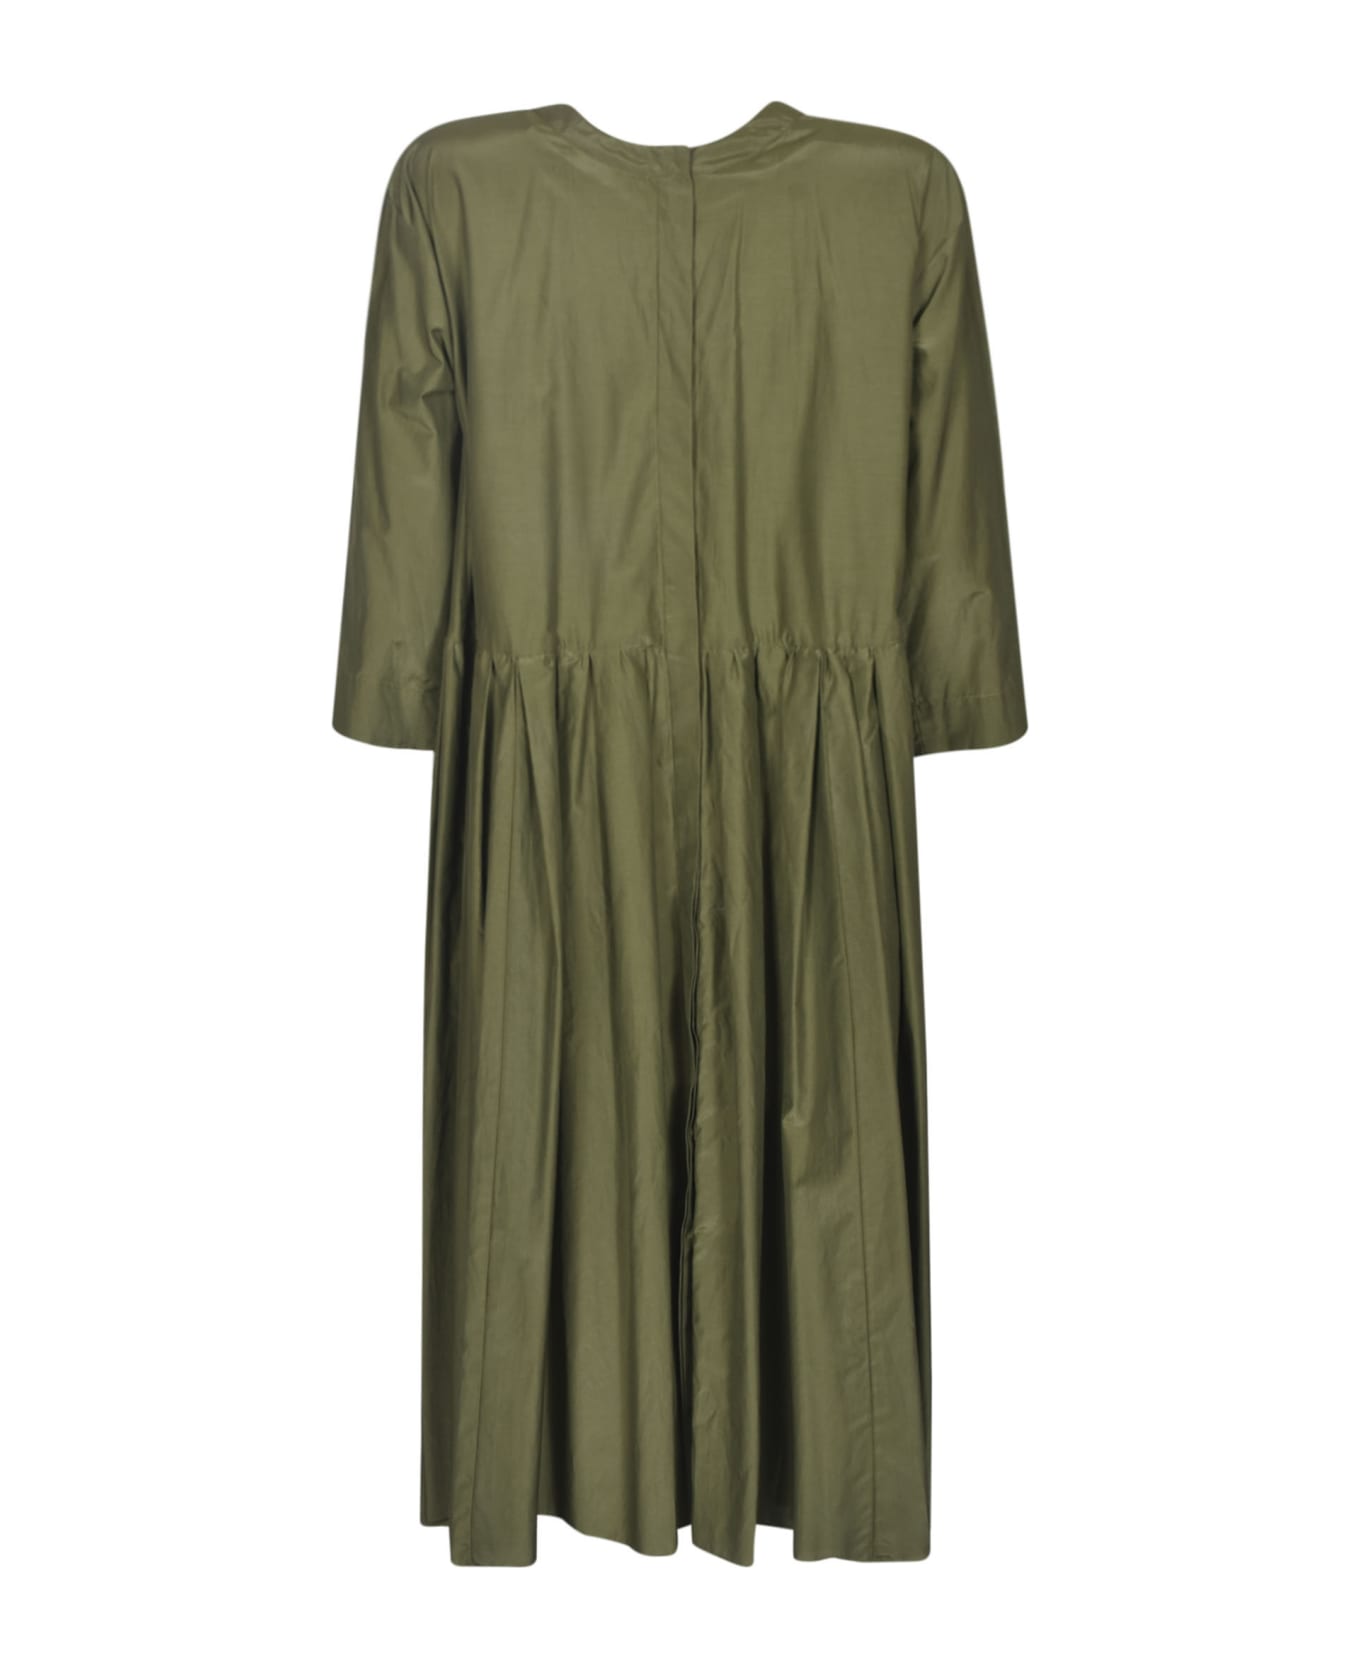 'S Max Mara Round Neck Oversized Dress - Green